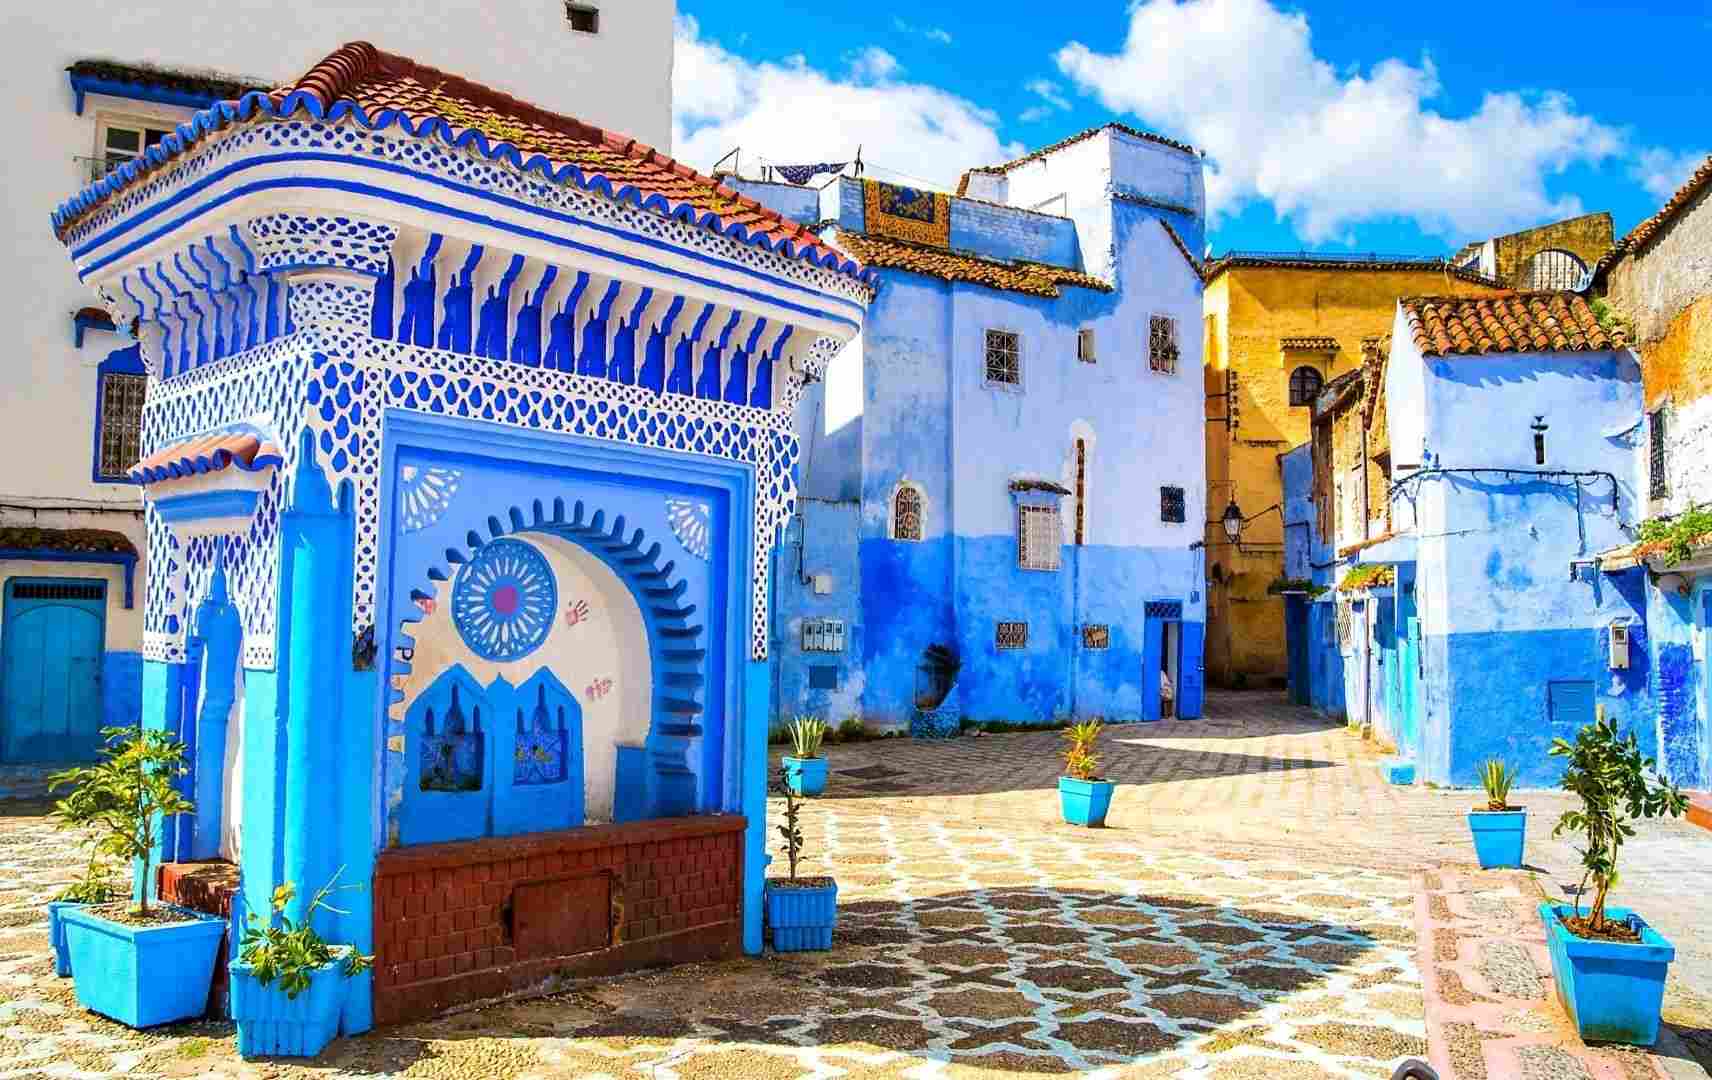 Marokko Chefchaouen